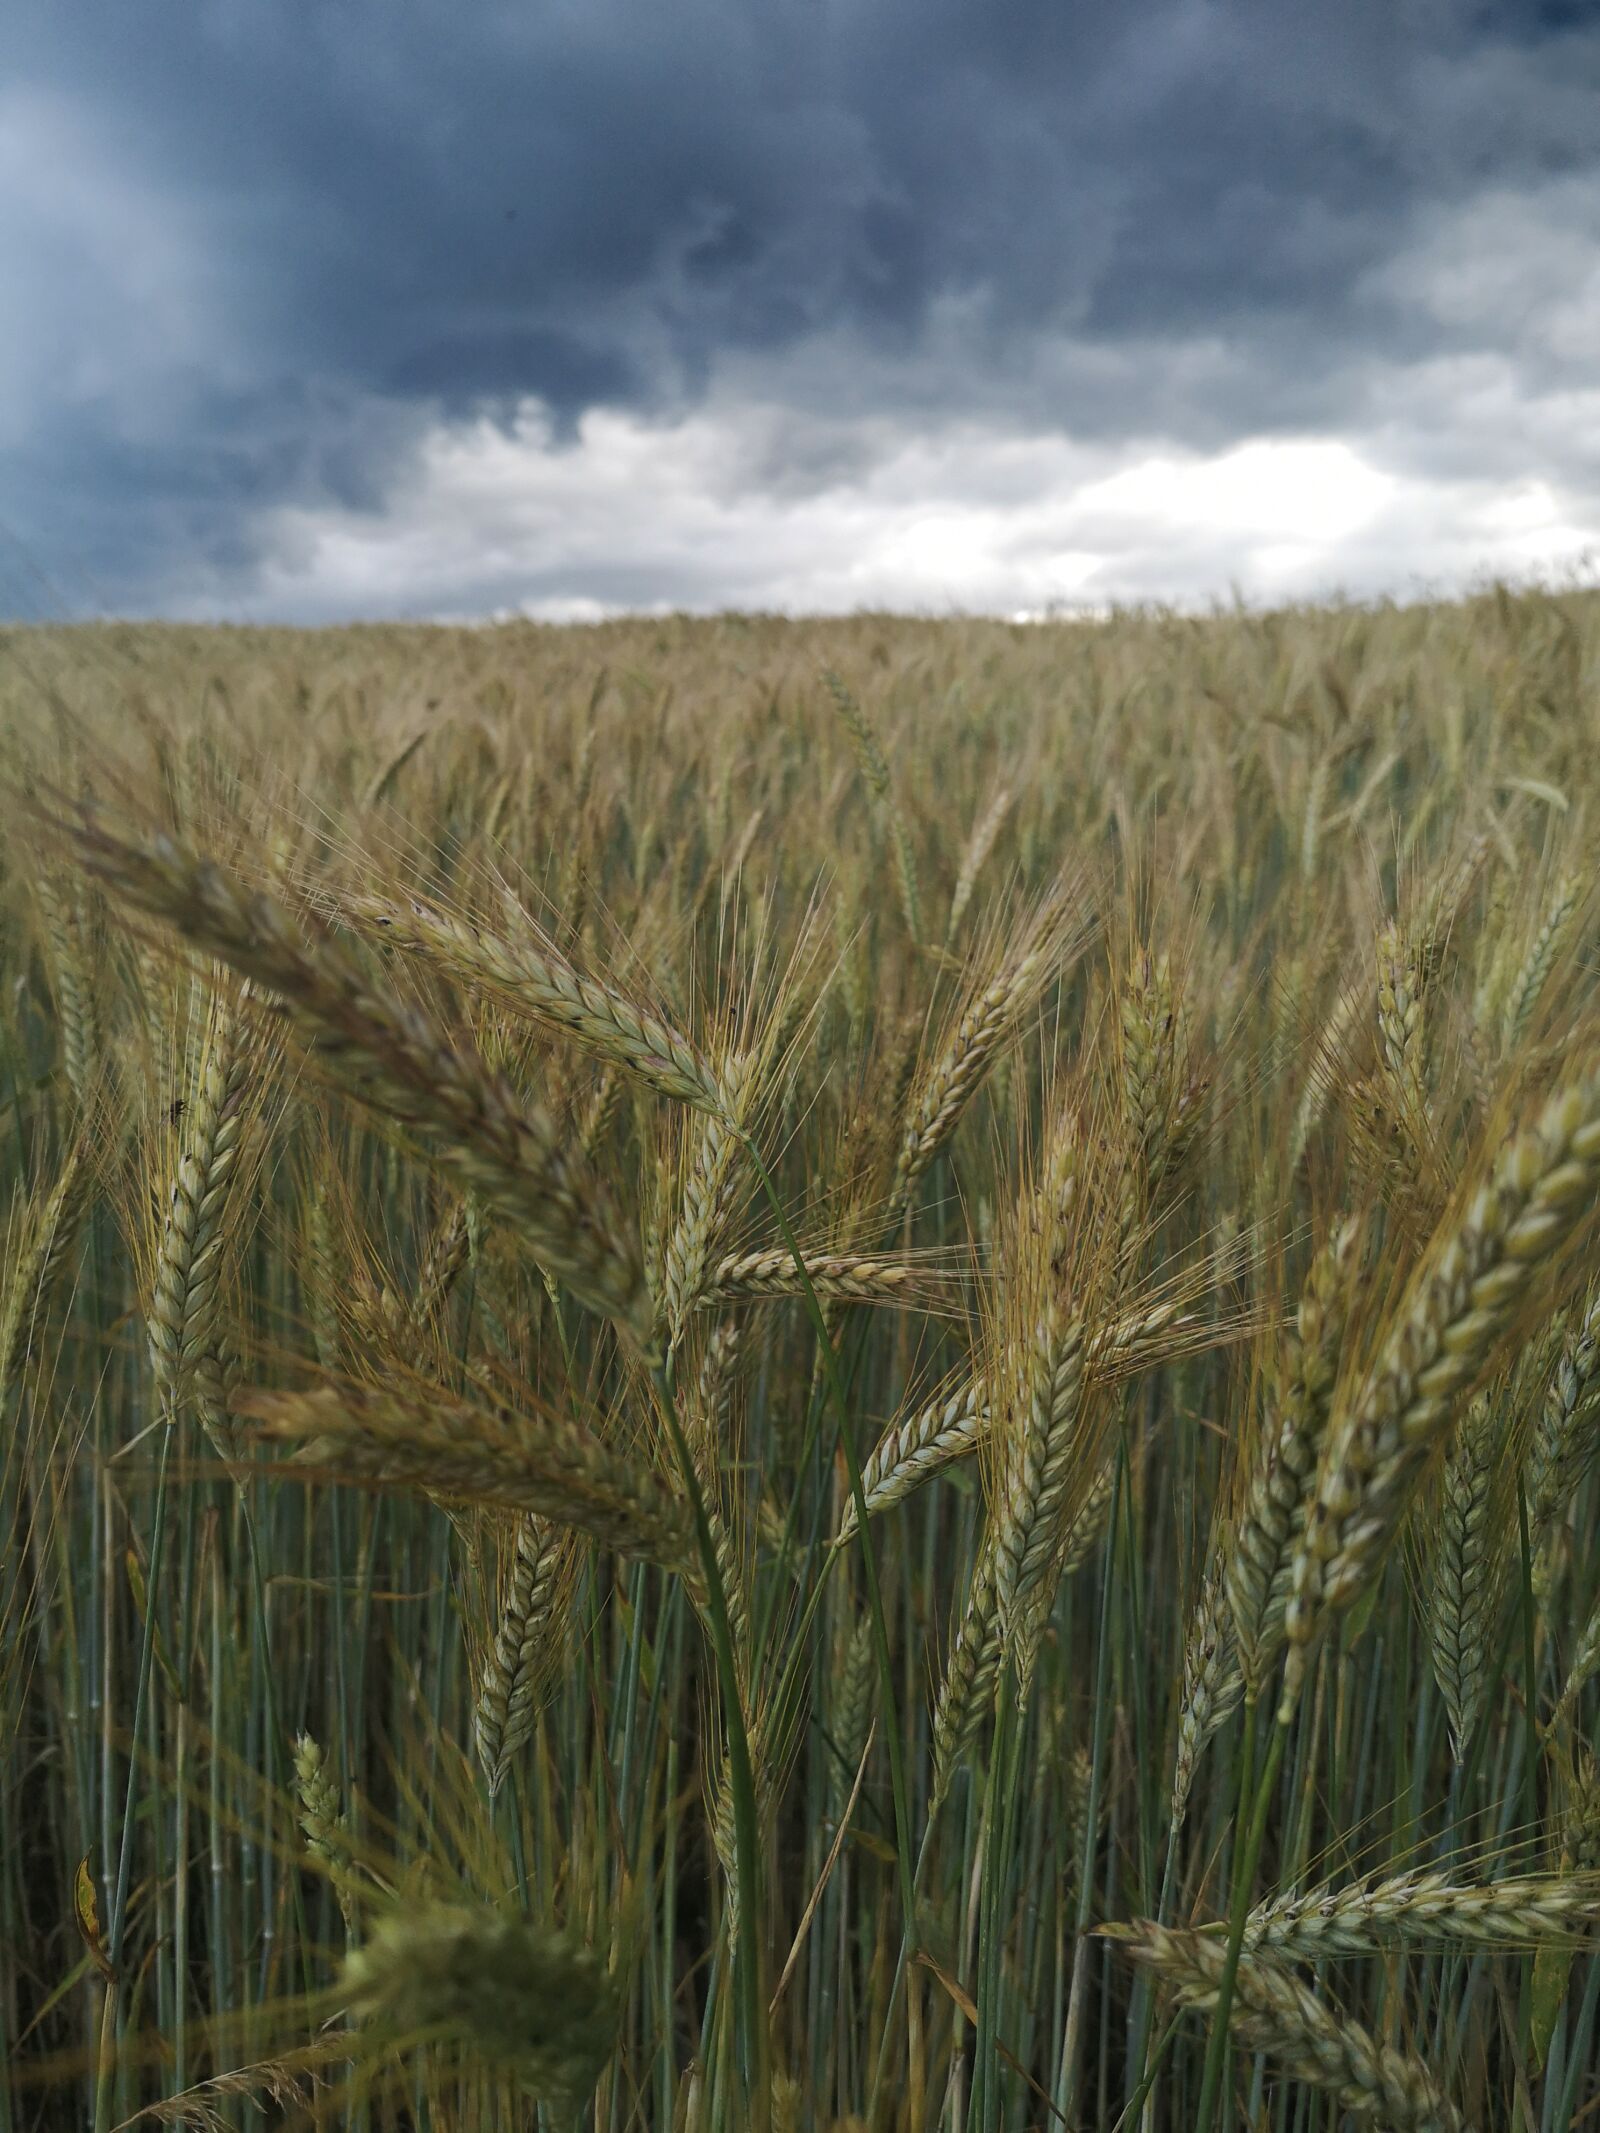 HUAWEI P20 sample photo. Grain, field, thunderstorm photography